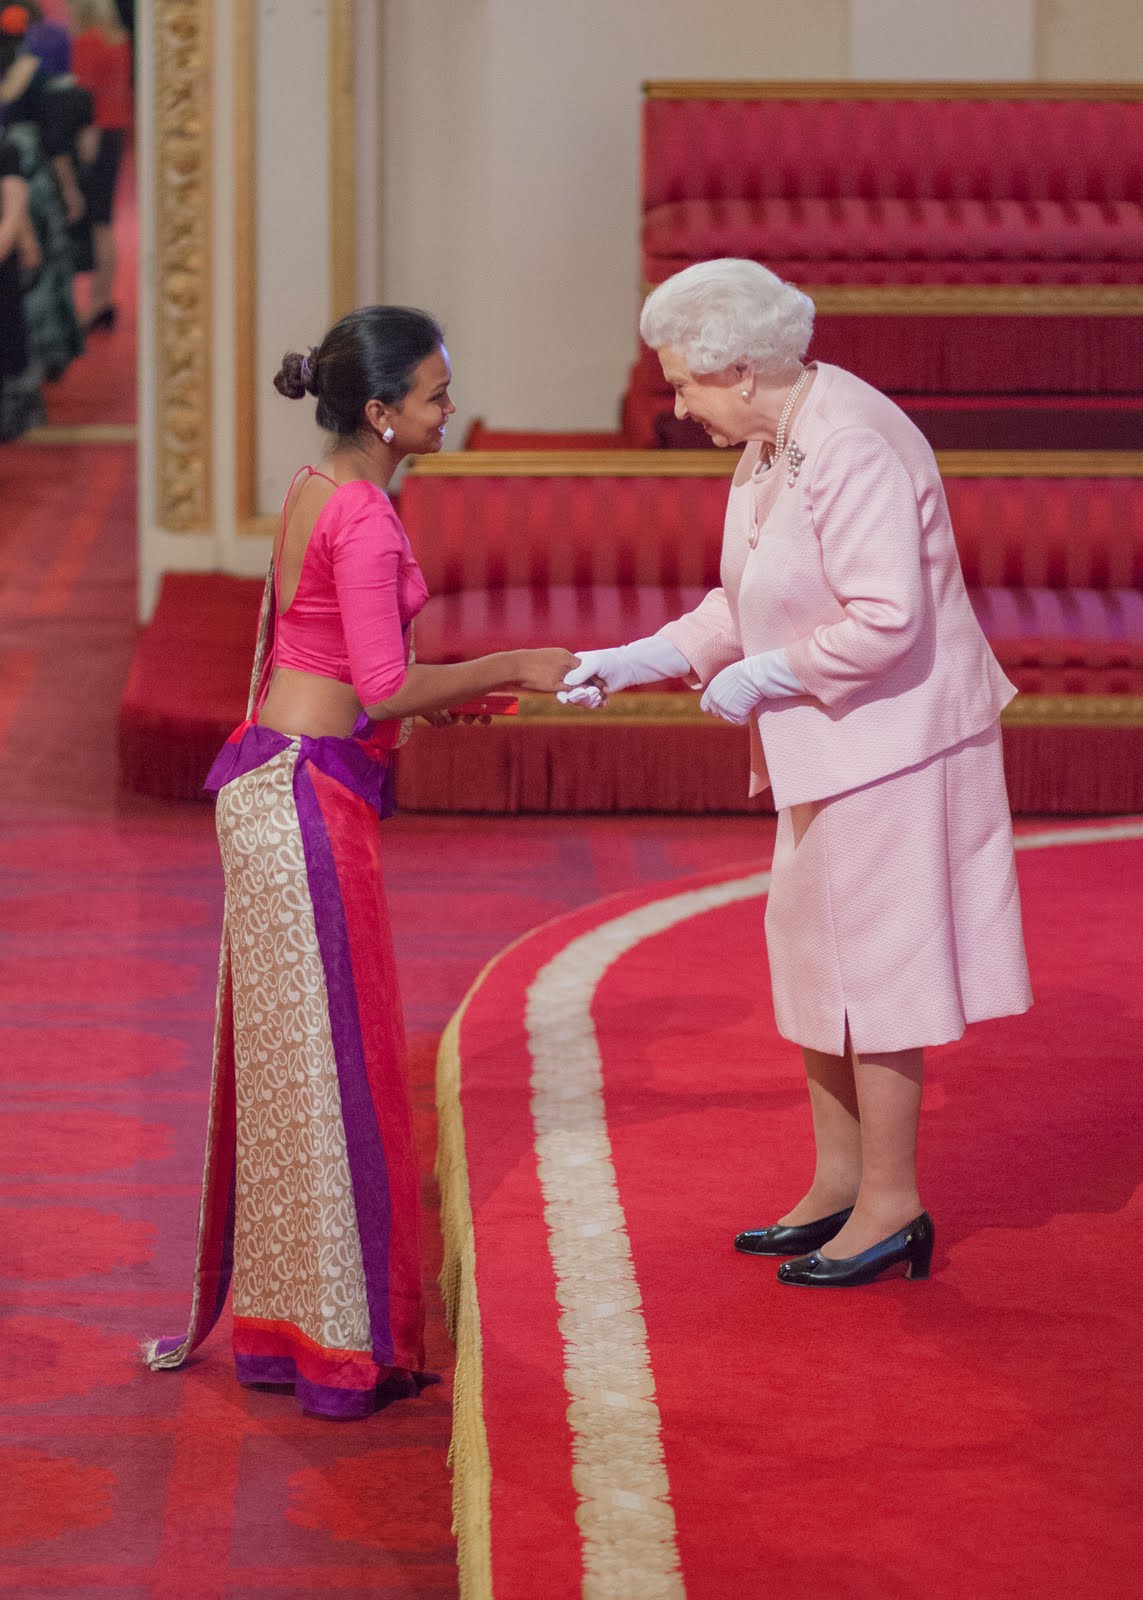 Kavindya Thennakoon 2015 Queen's Young Leader from Sri Lanka